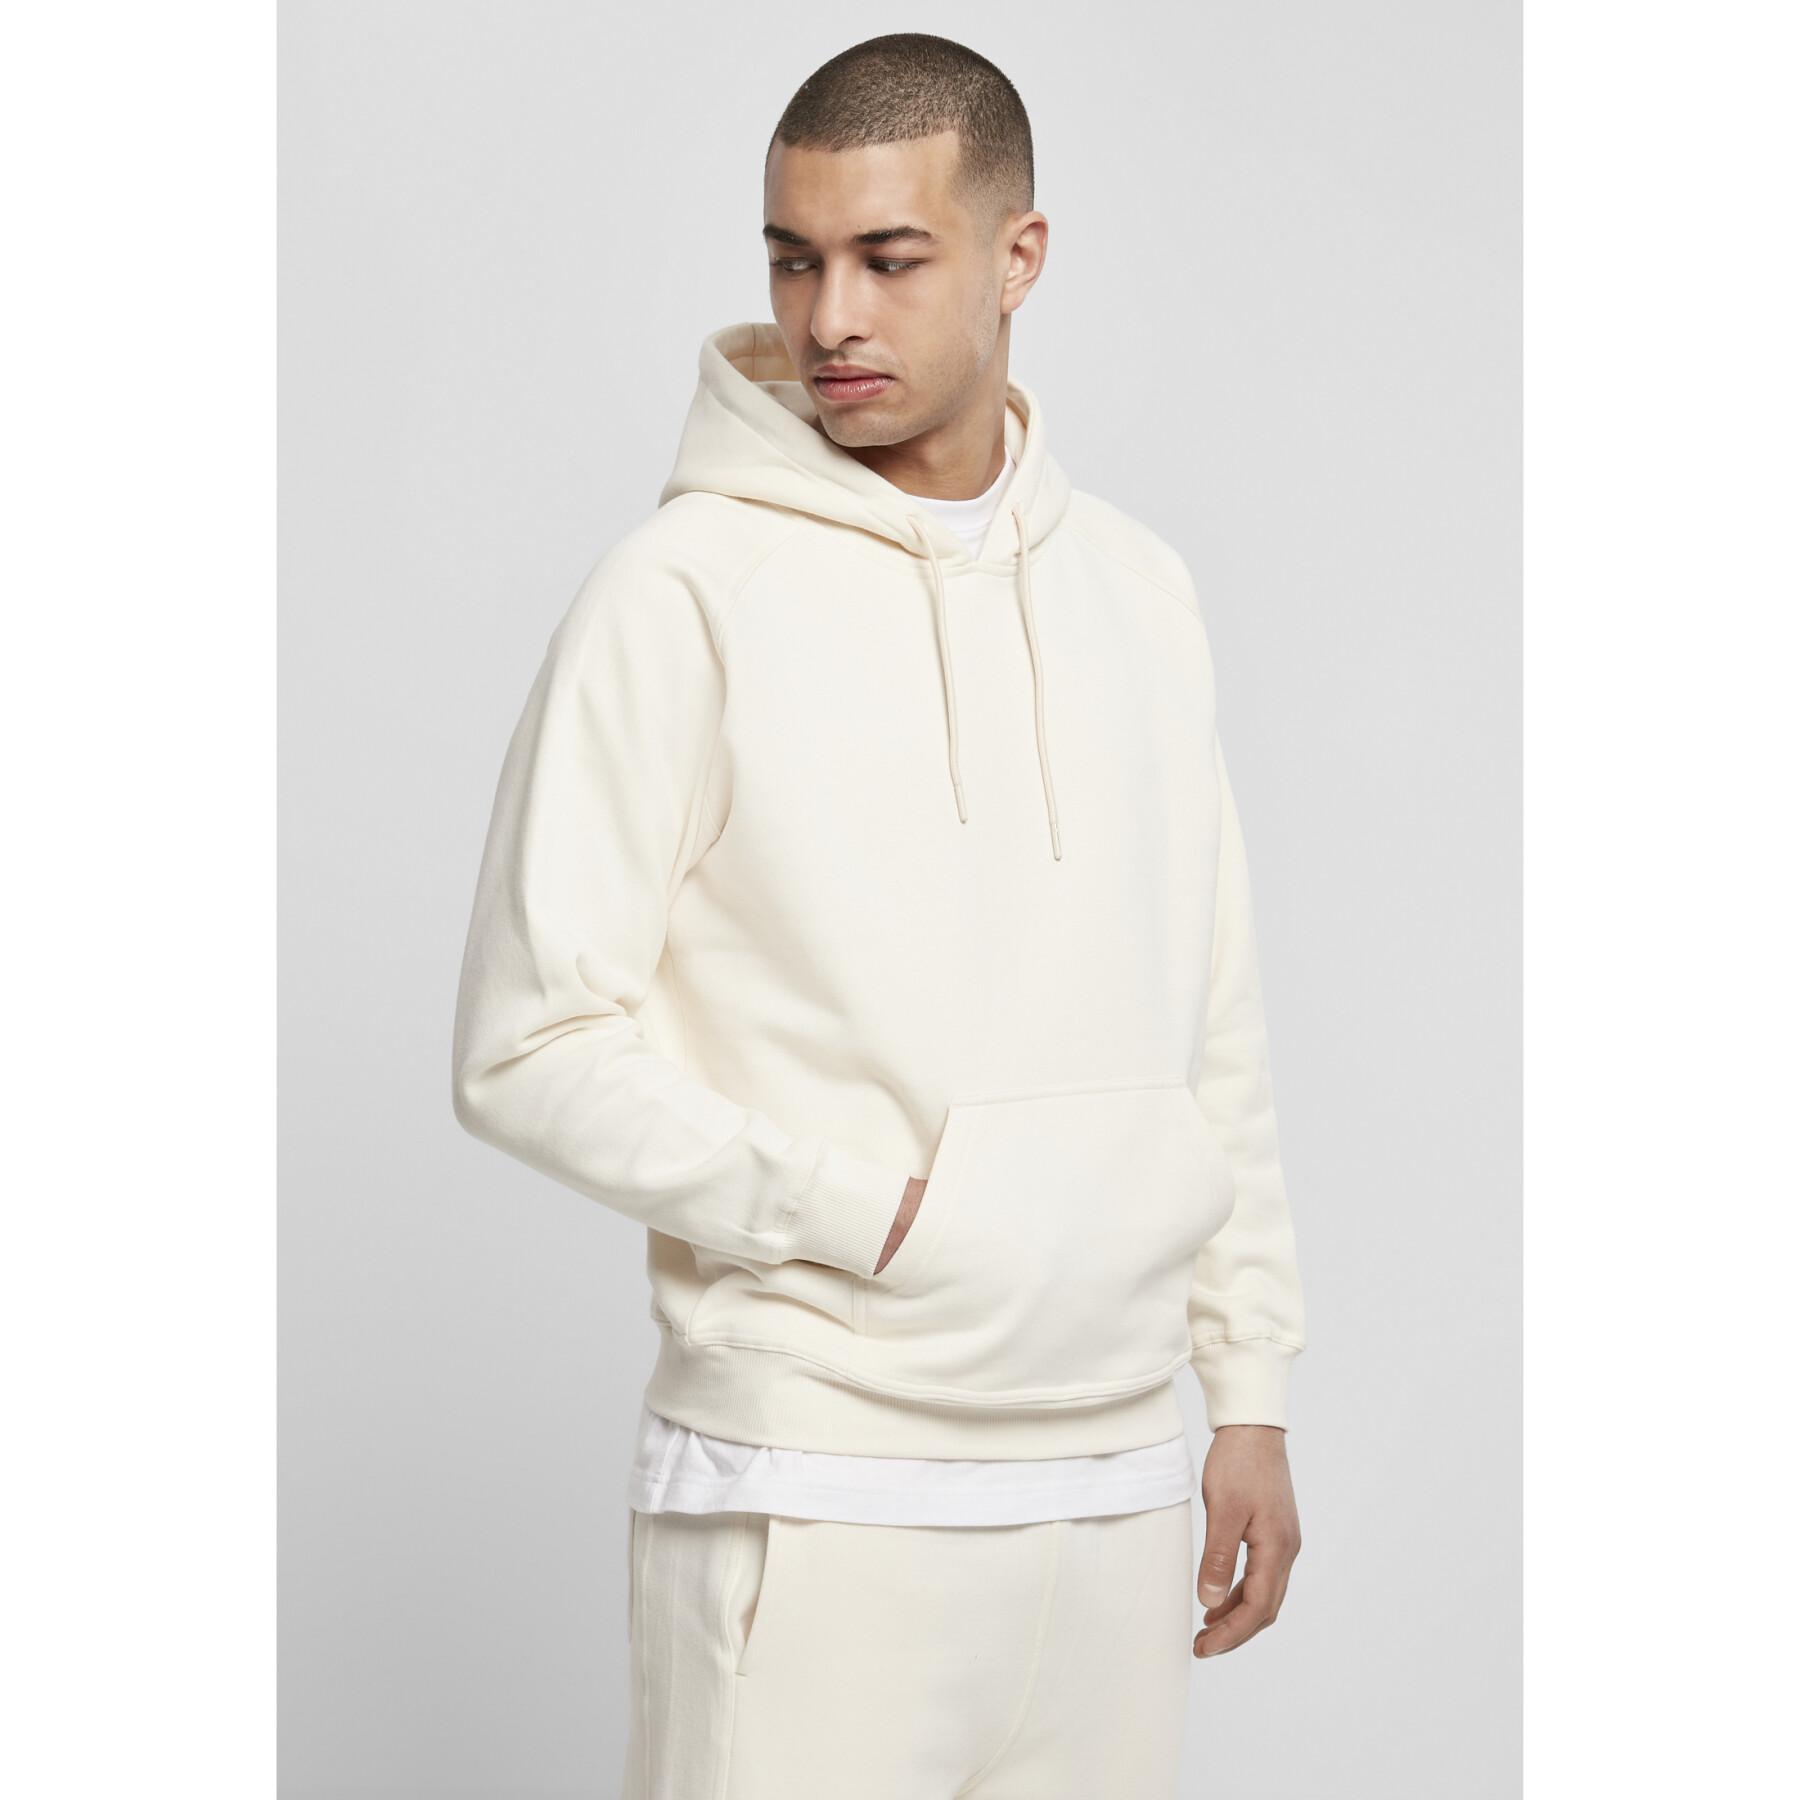 Hooded sweatshirt Urban Classics blank- large sizes